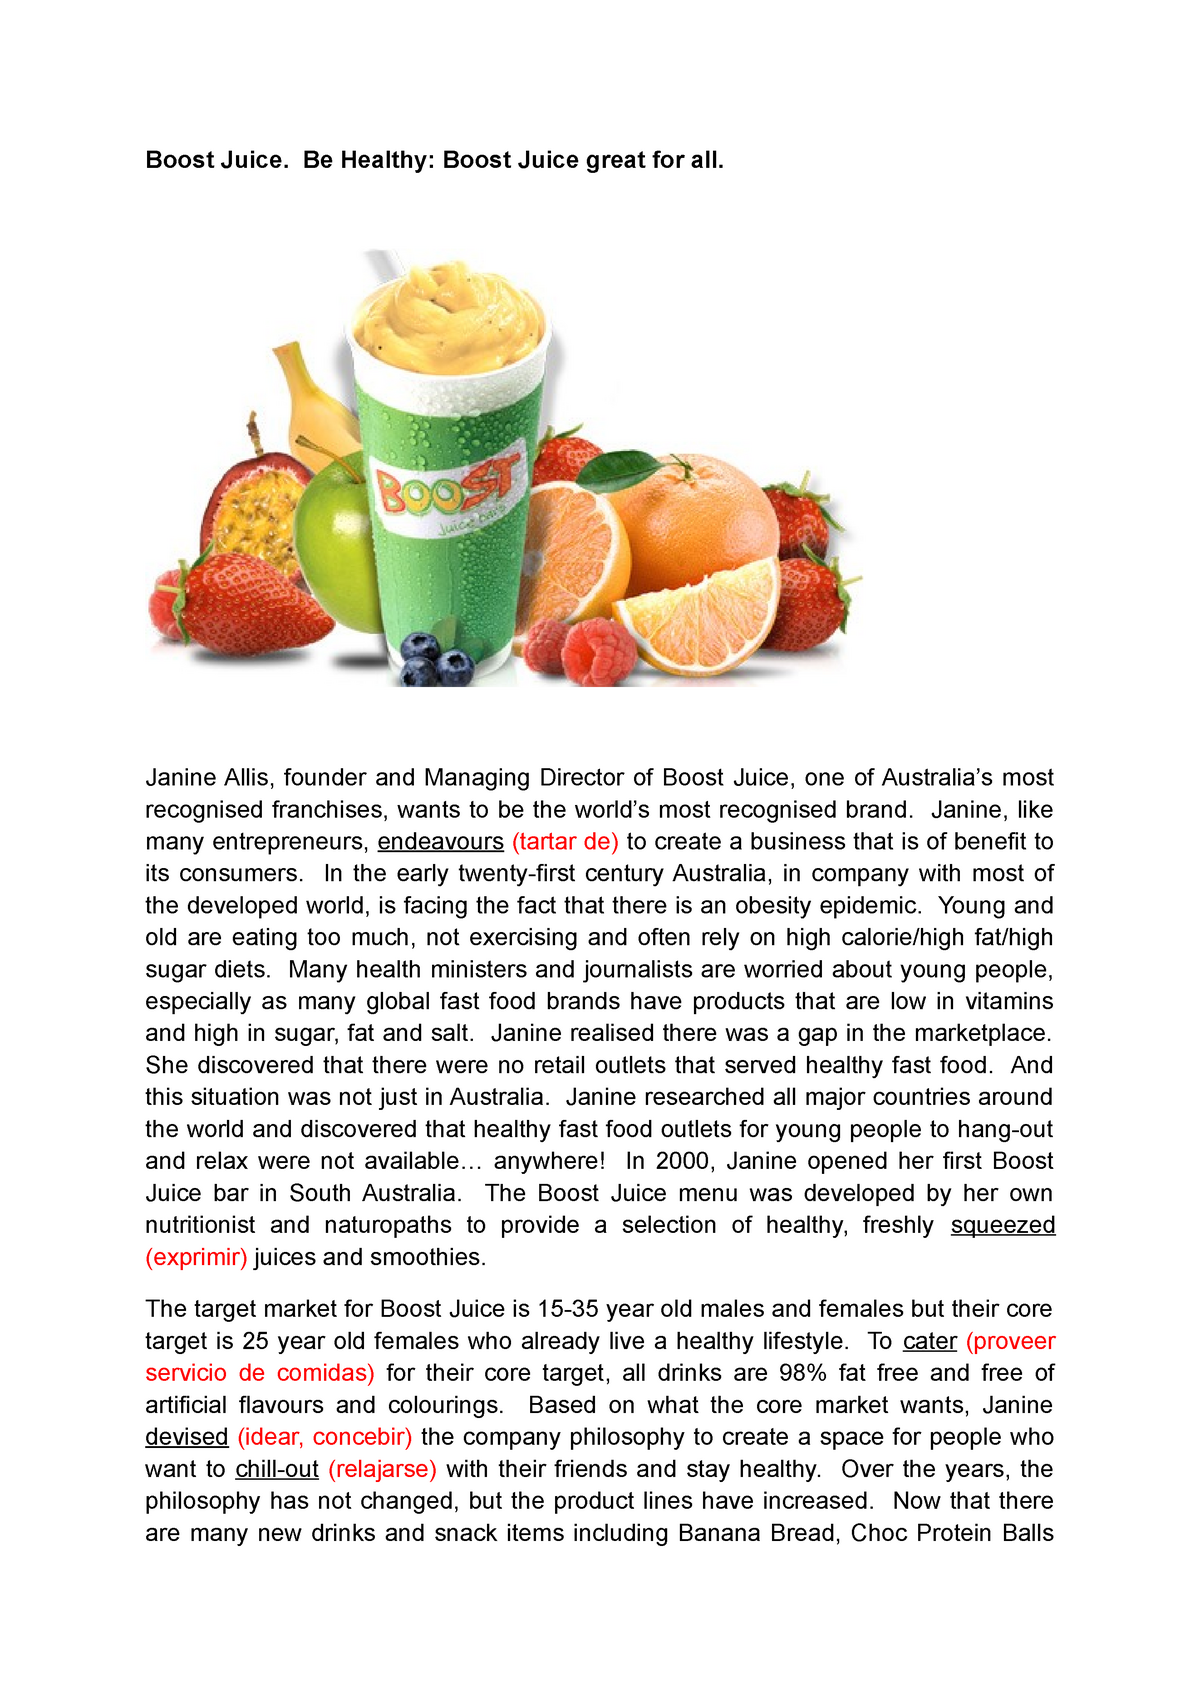 boost juice franchise case study